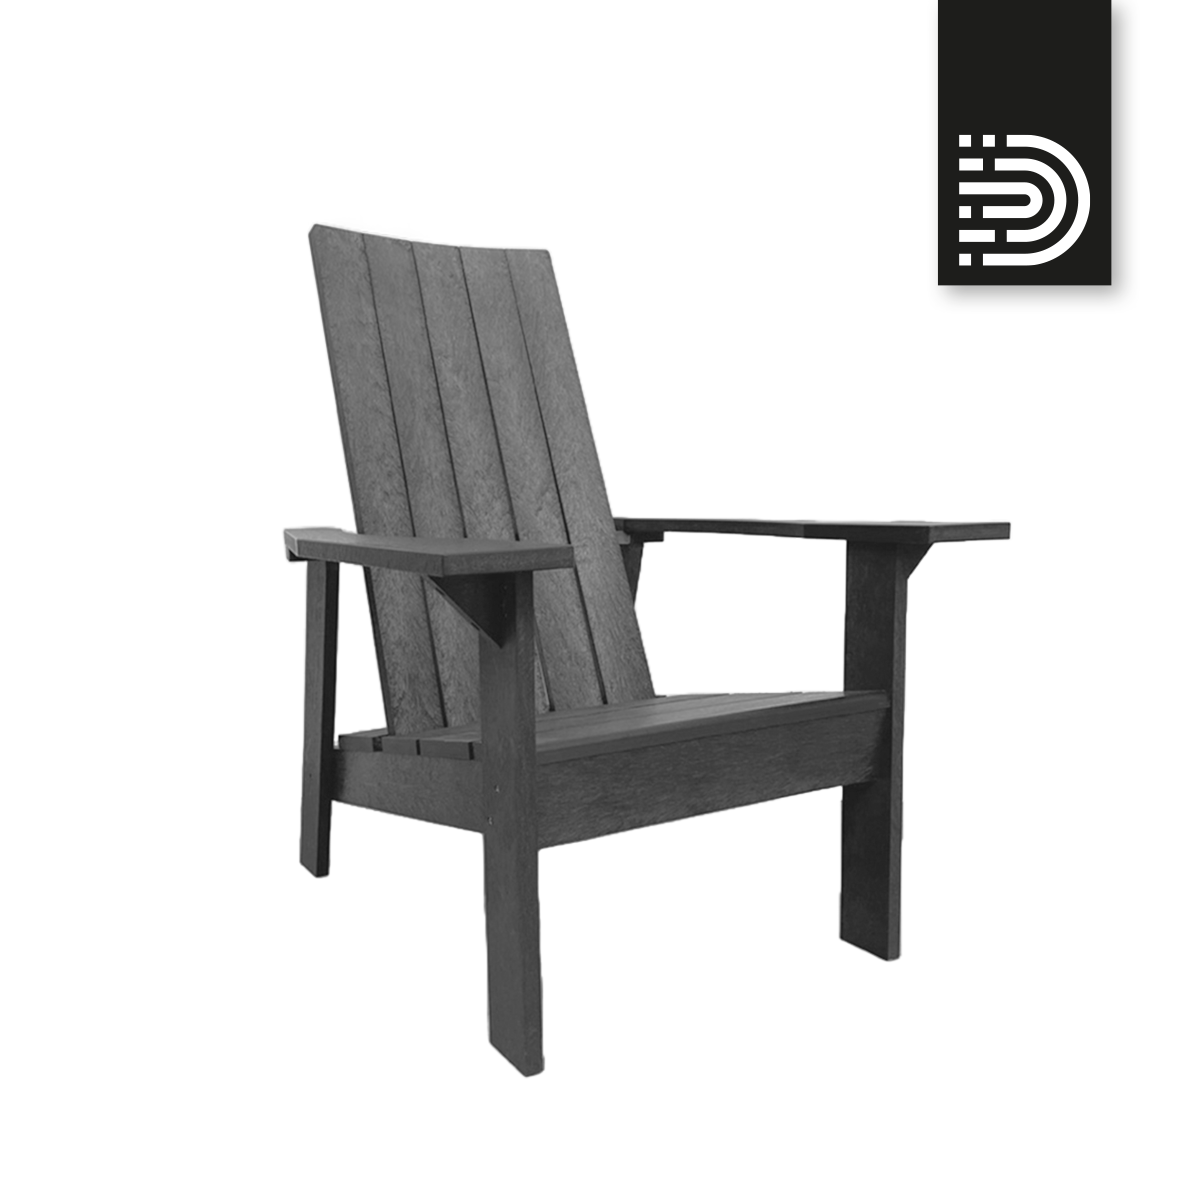 CX10 Flatback Adirondack Chair - Greystone 48